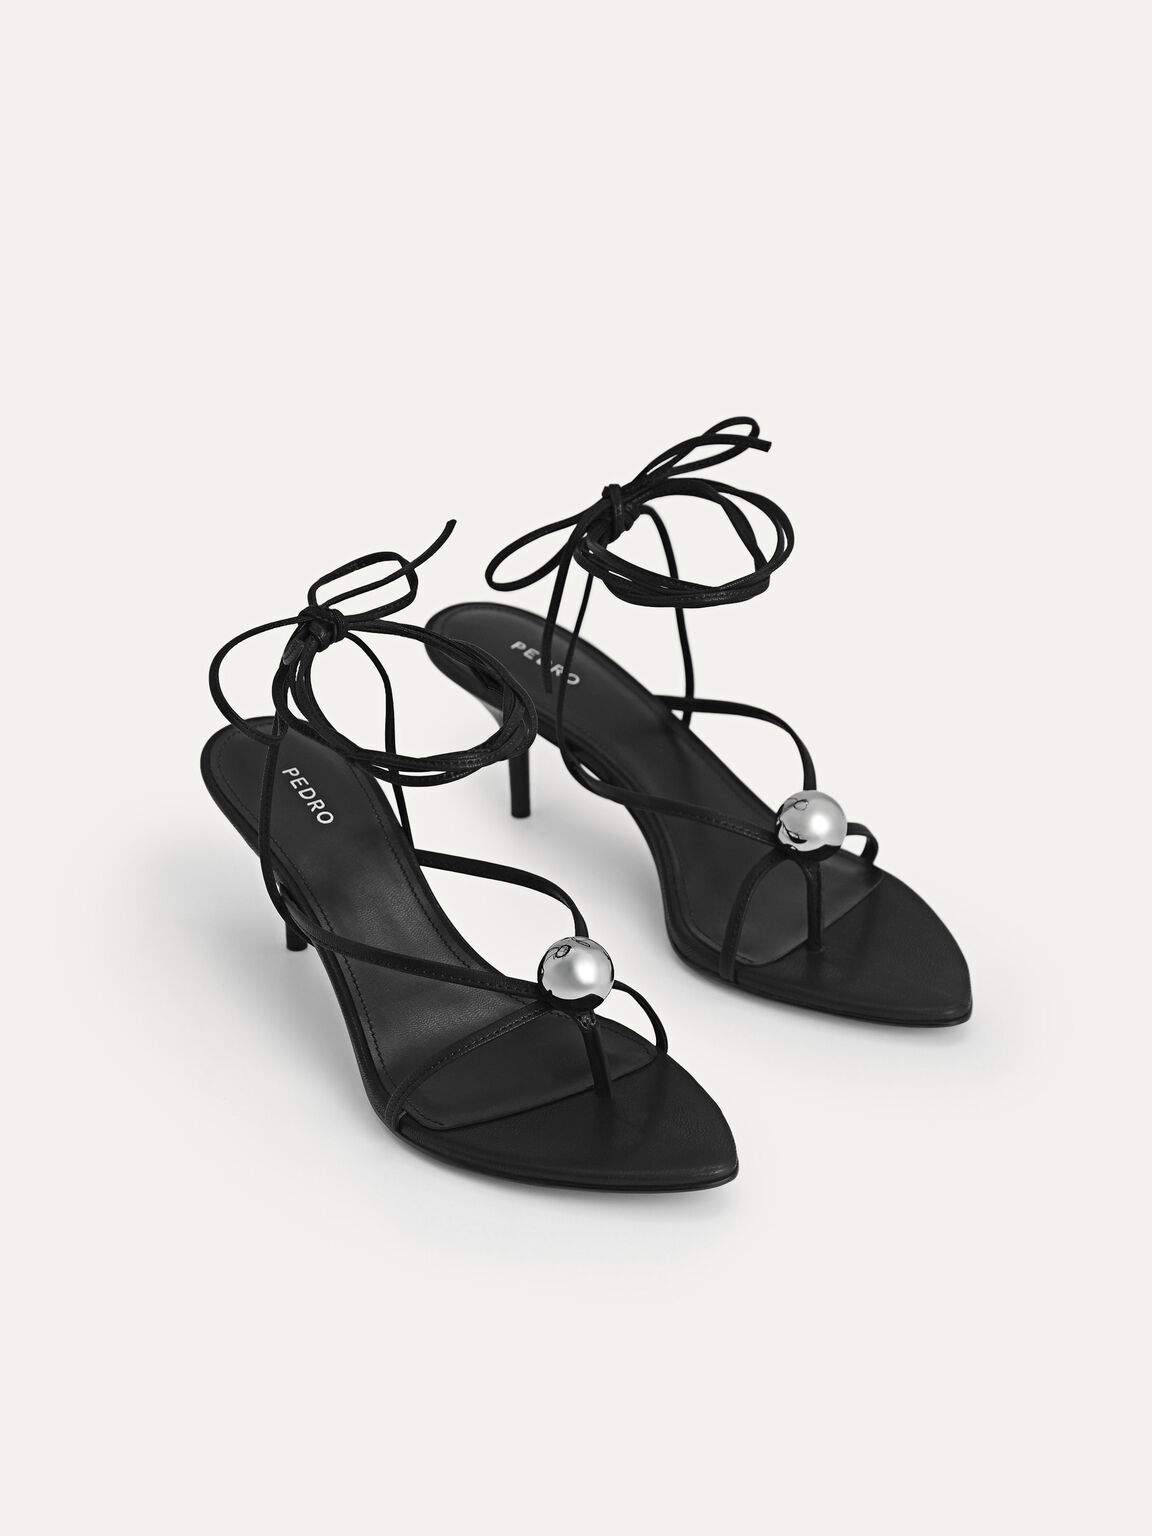 Orb Lace-Up Heeled Sandals, Black